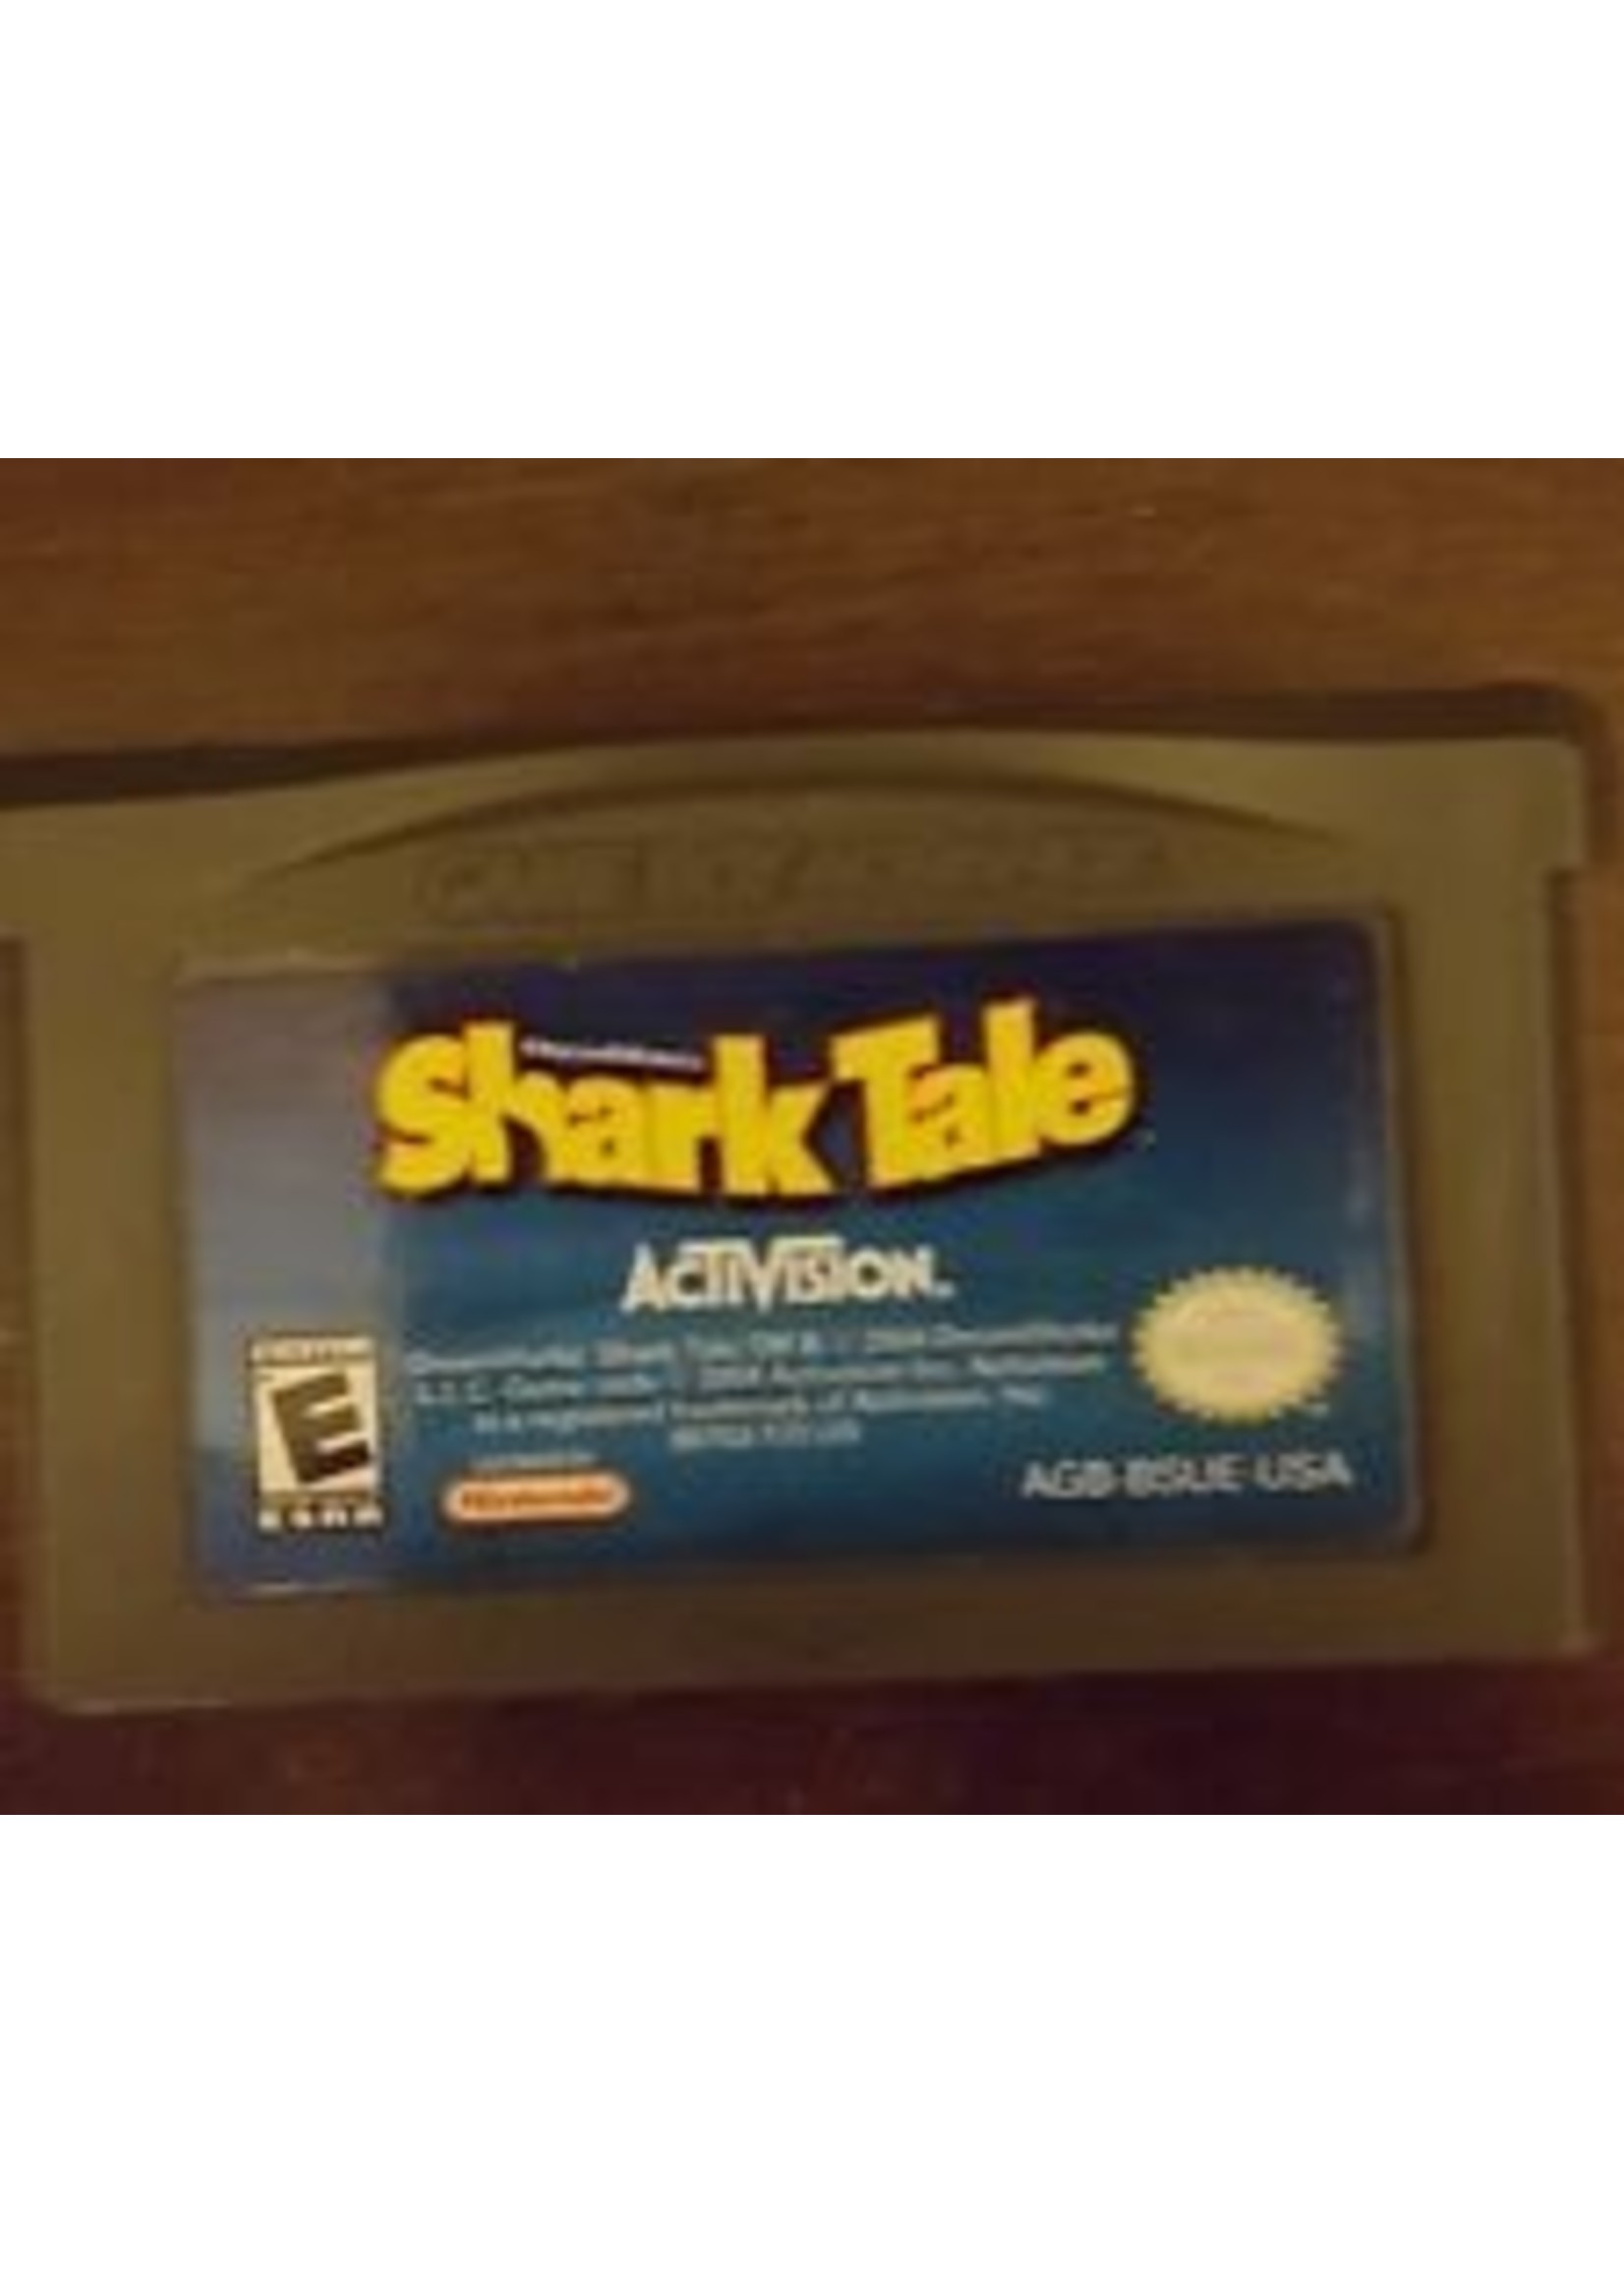 Nintendo Gameboy Advance Shark Tale